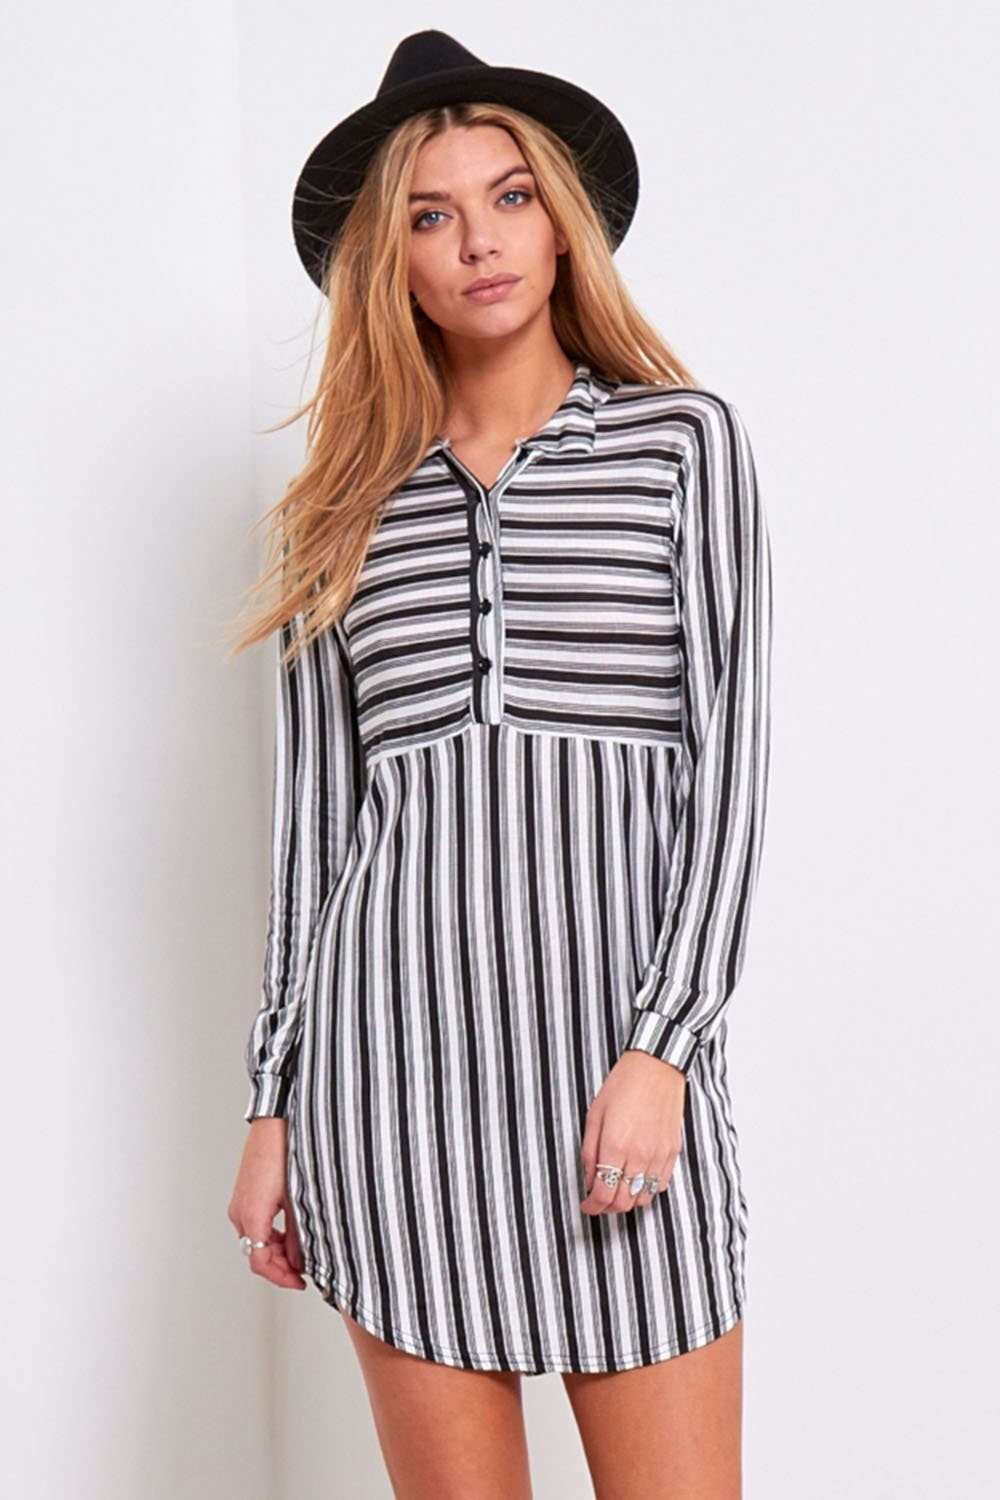 Iris Monochrome Striped Shirt Dress - bejealous-com